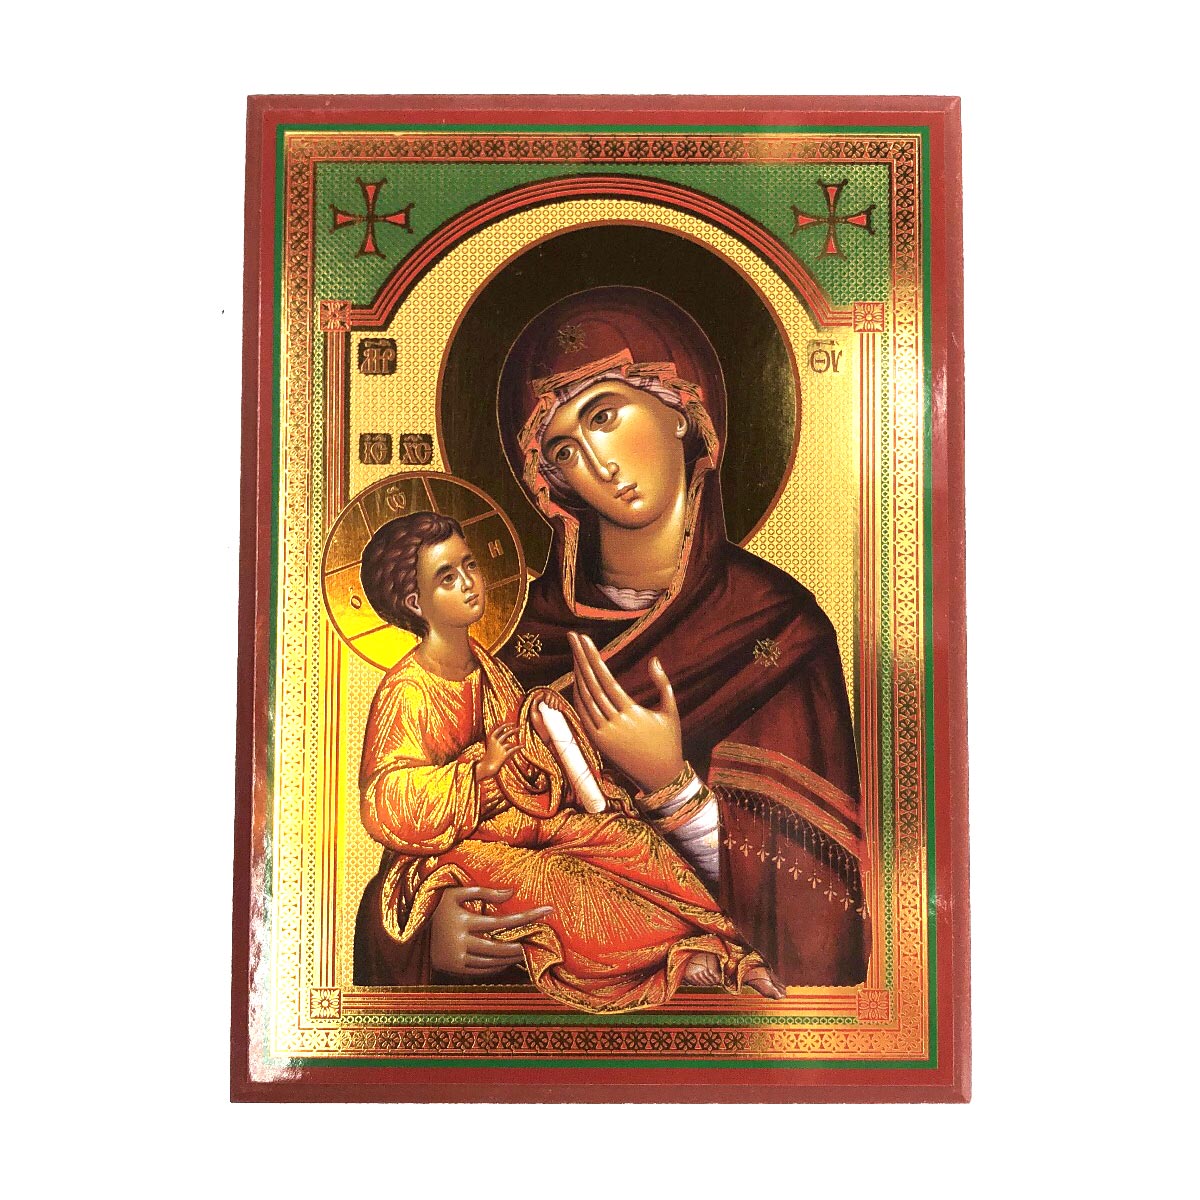 Glorious Orthodox Icon of the Theotokos (Virgin Mary).